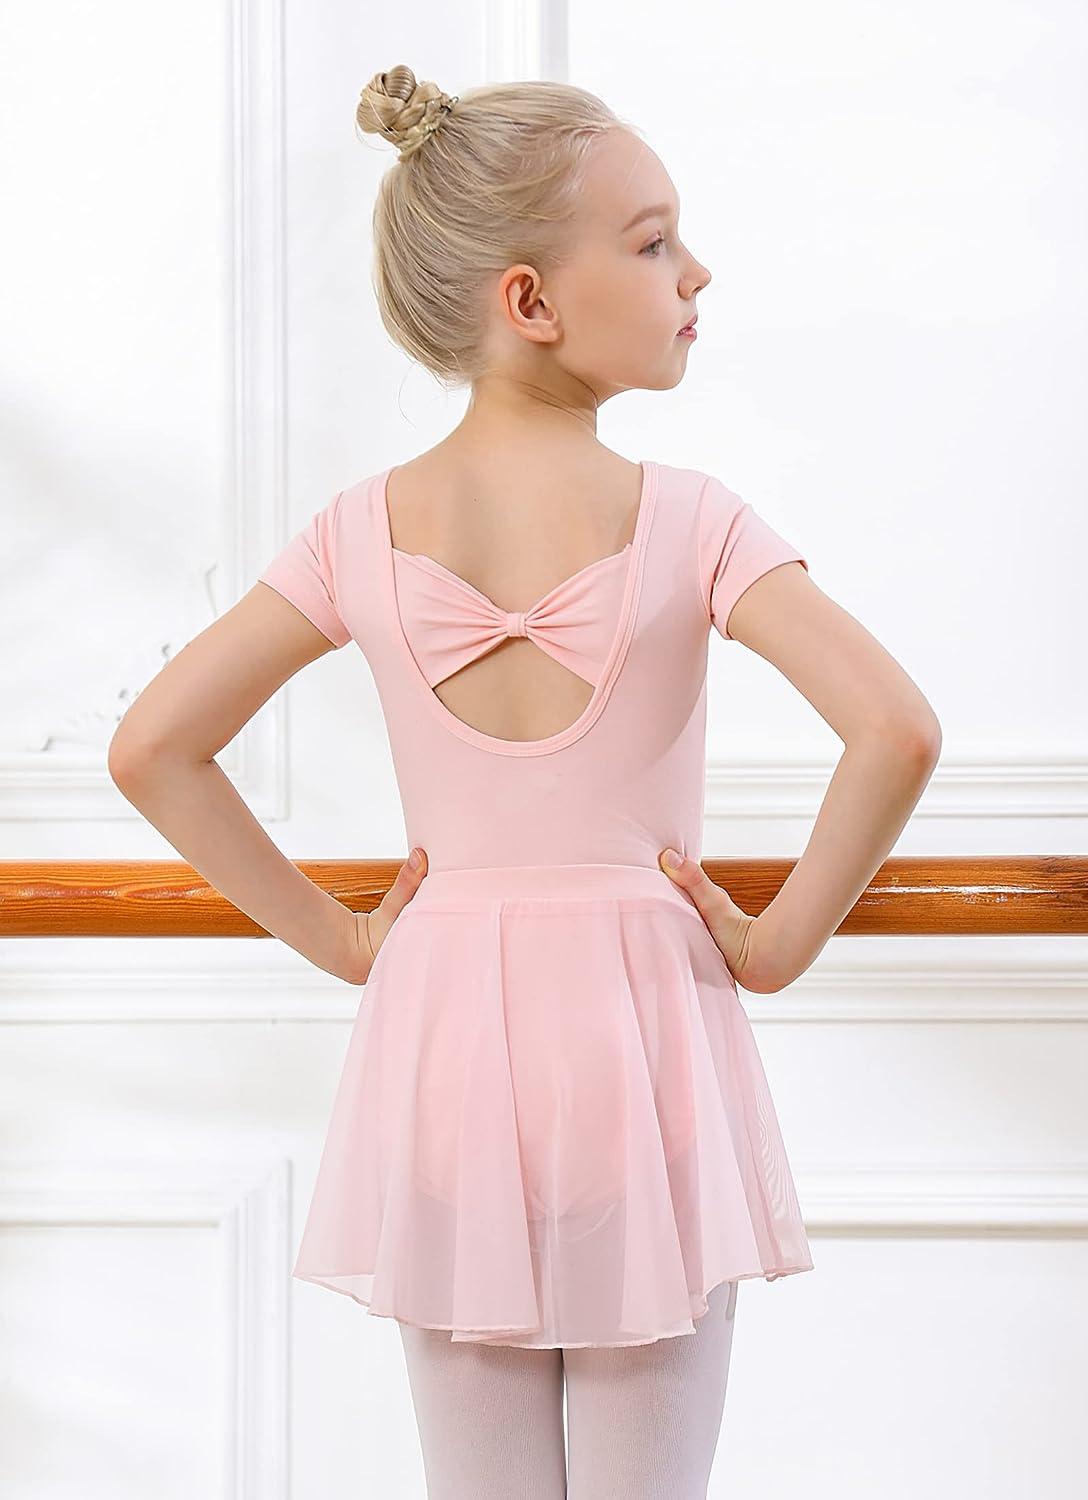 DIPUG Girls Ballet Leotards with Removable Skirt Toddler Hollow